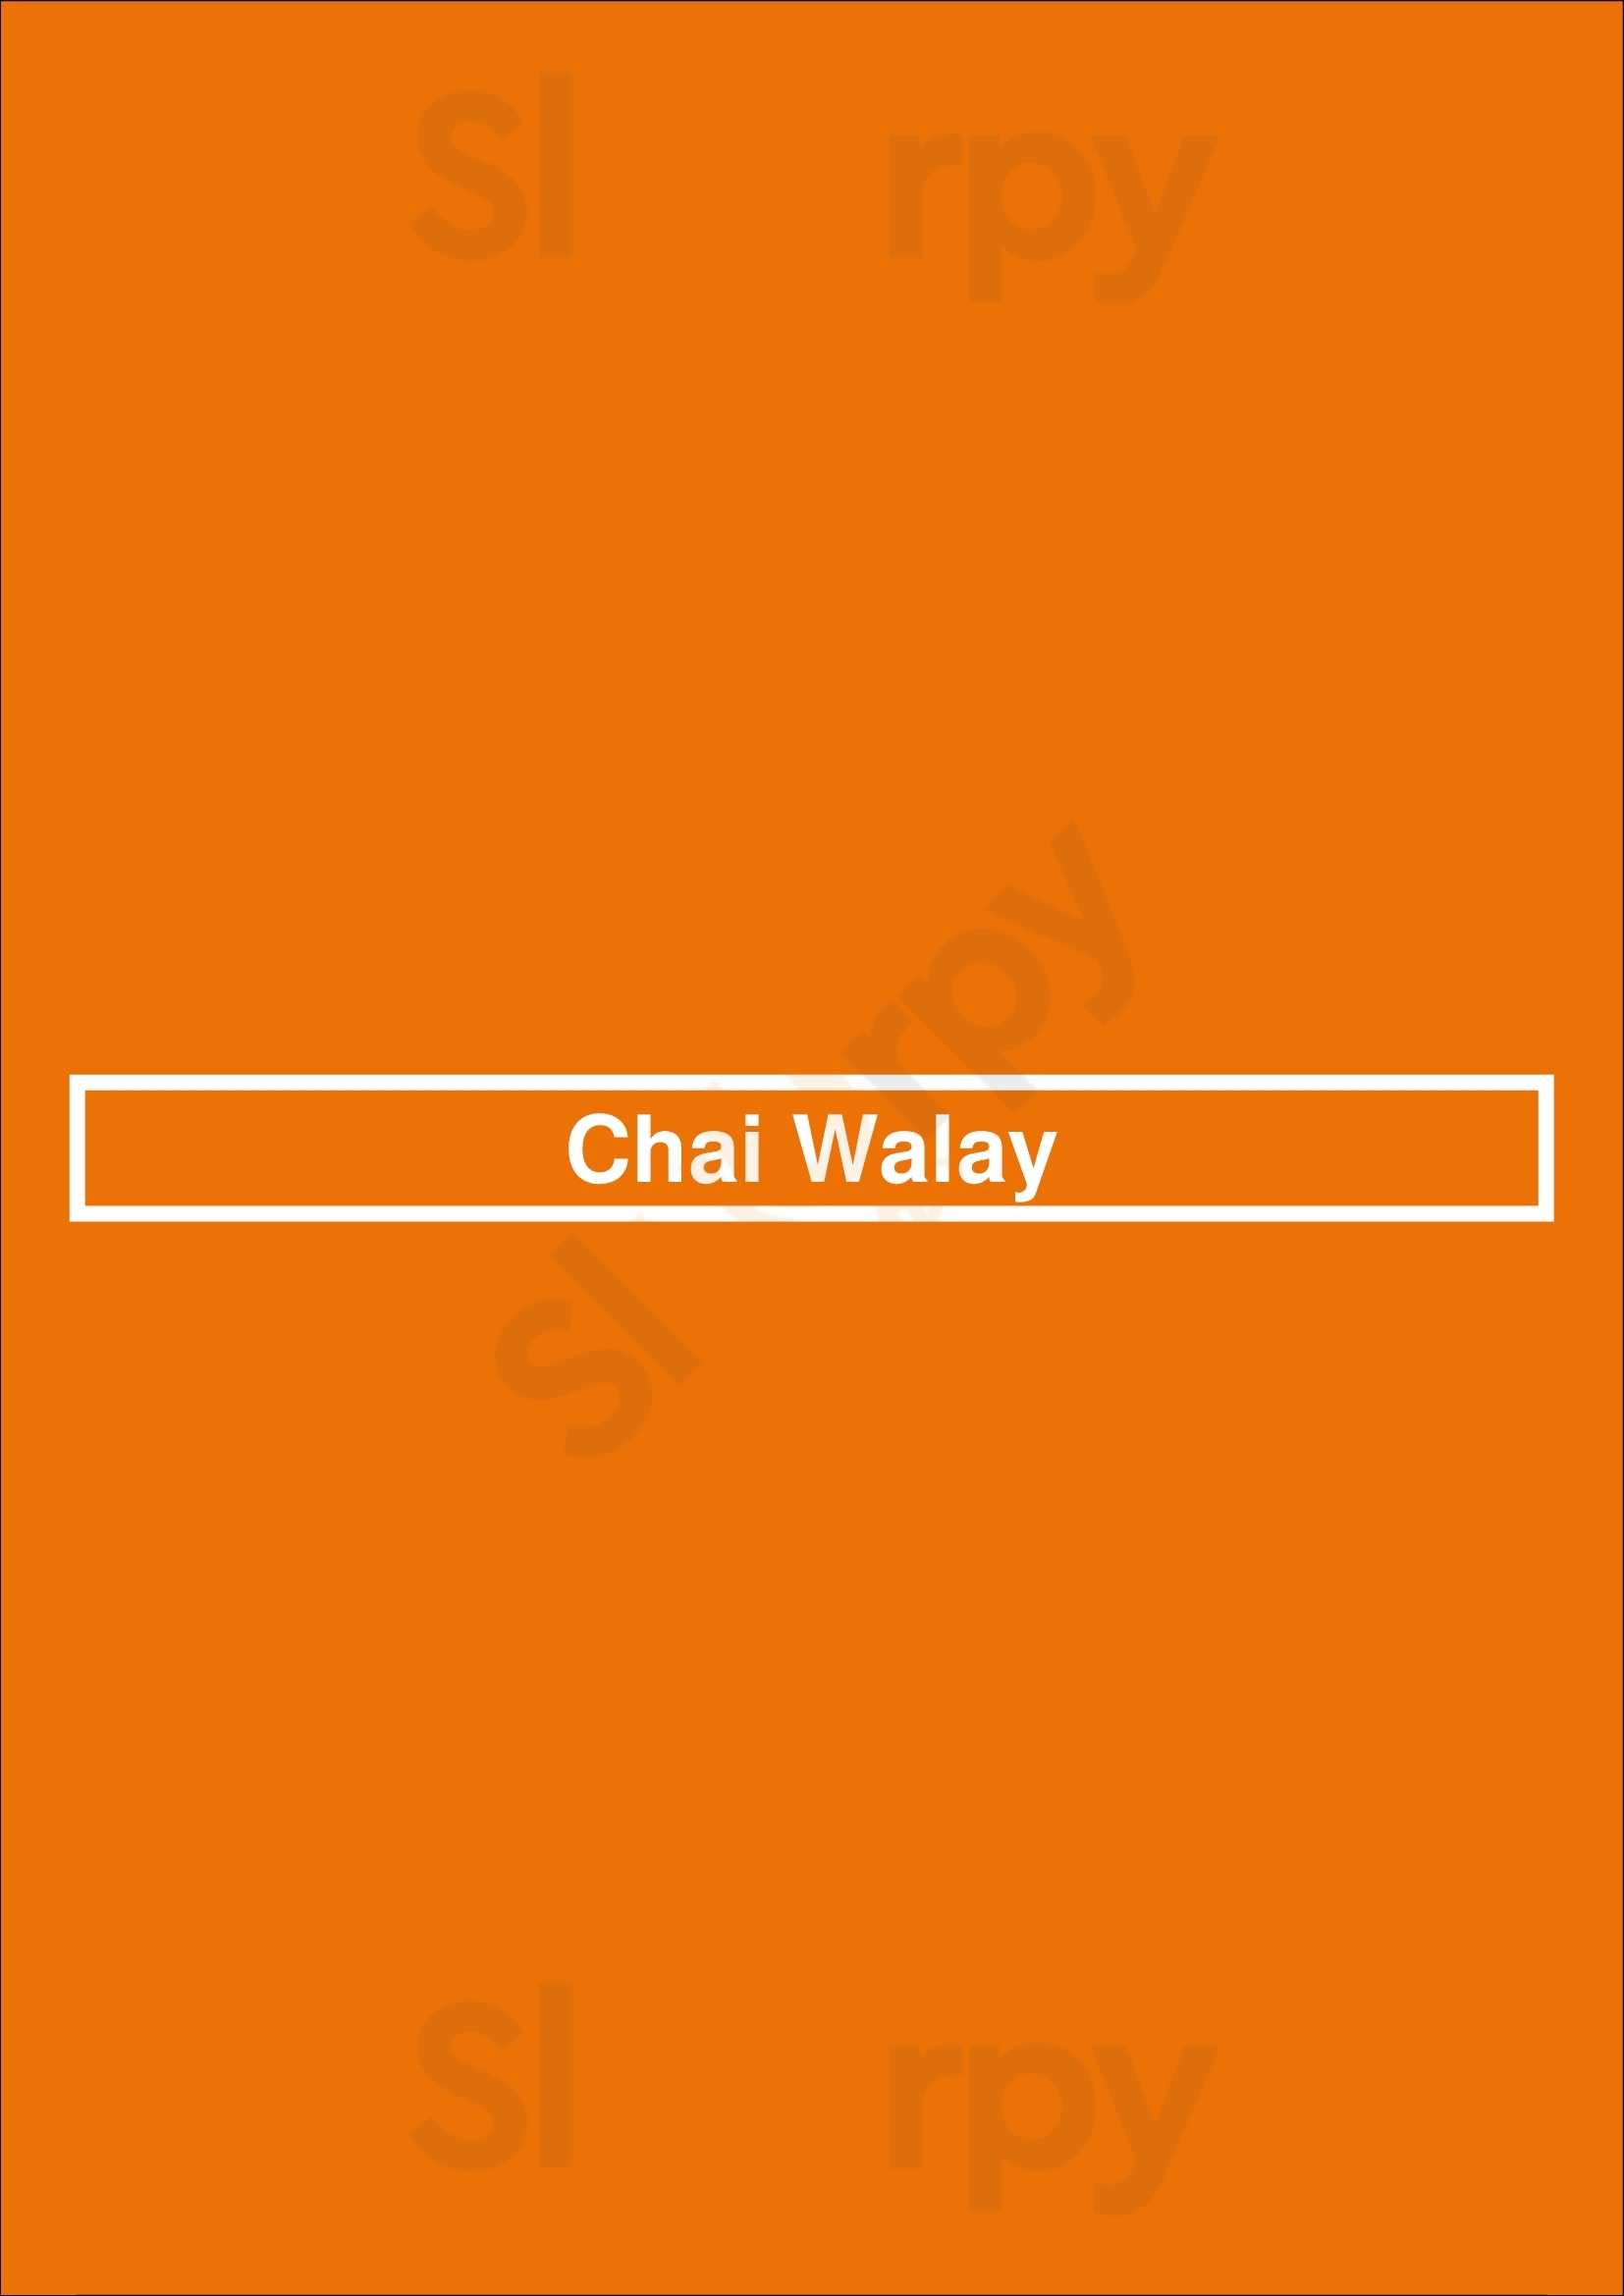 Chai Walay Leeds Menu - 1